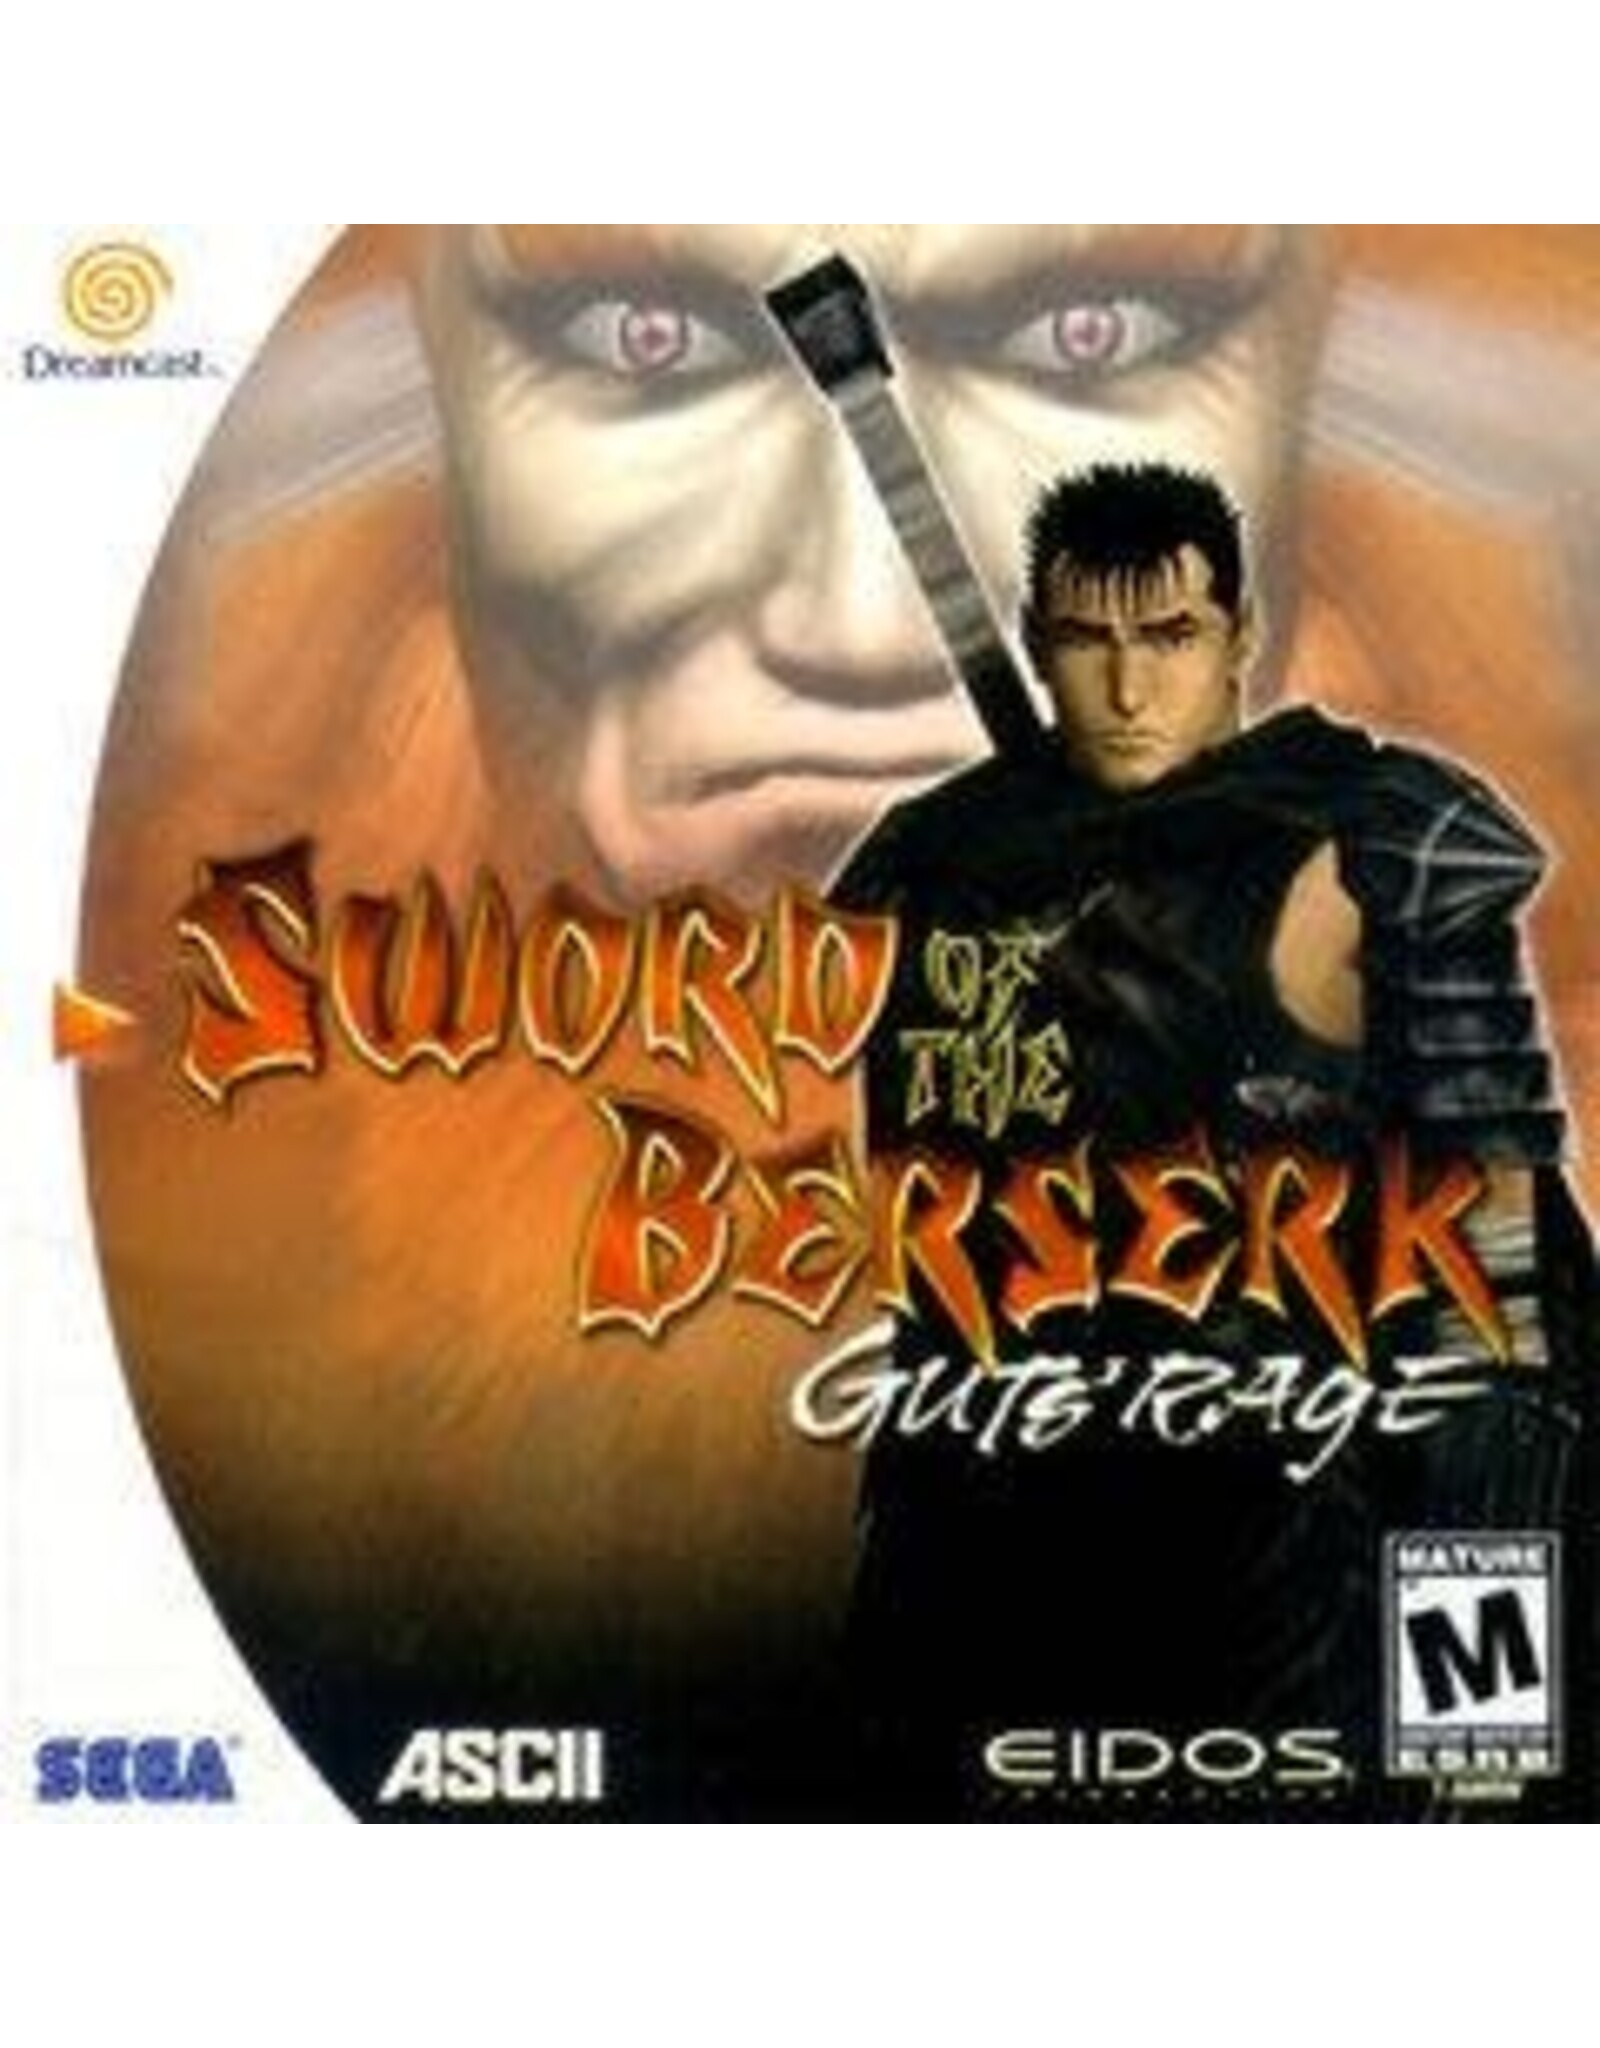 Sega Dreamcast Sword of the Berserk: Gut's Rage (CiB)